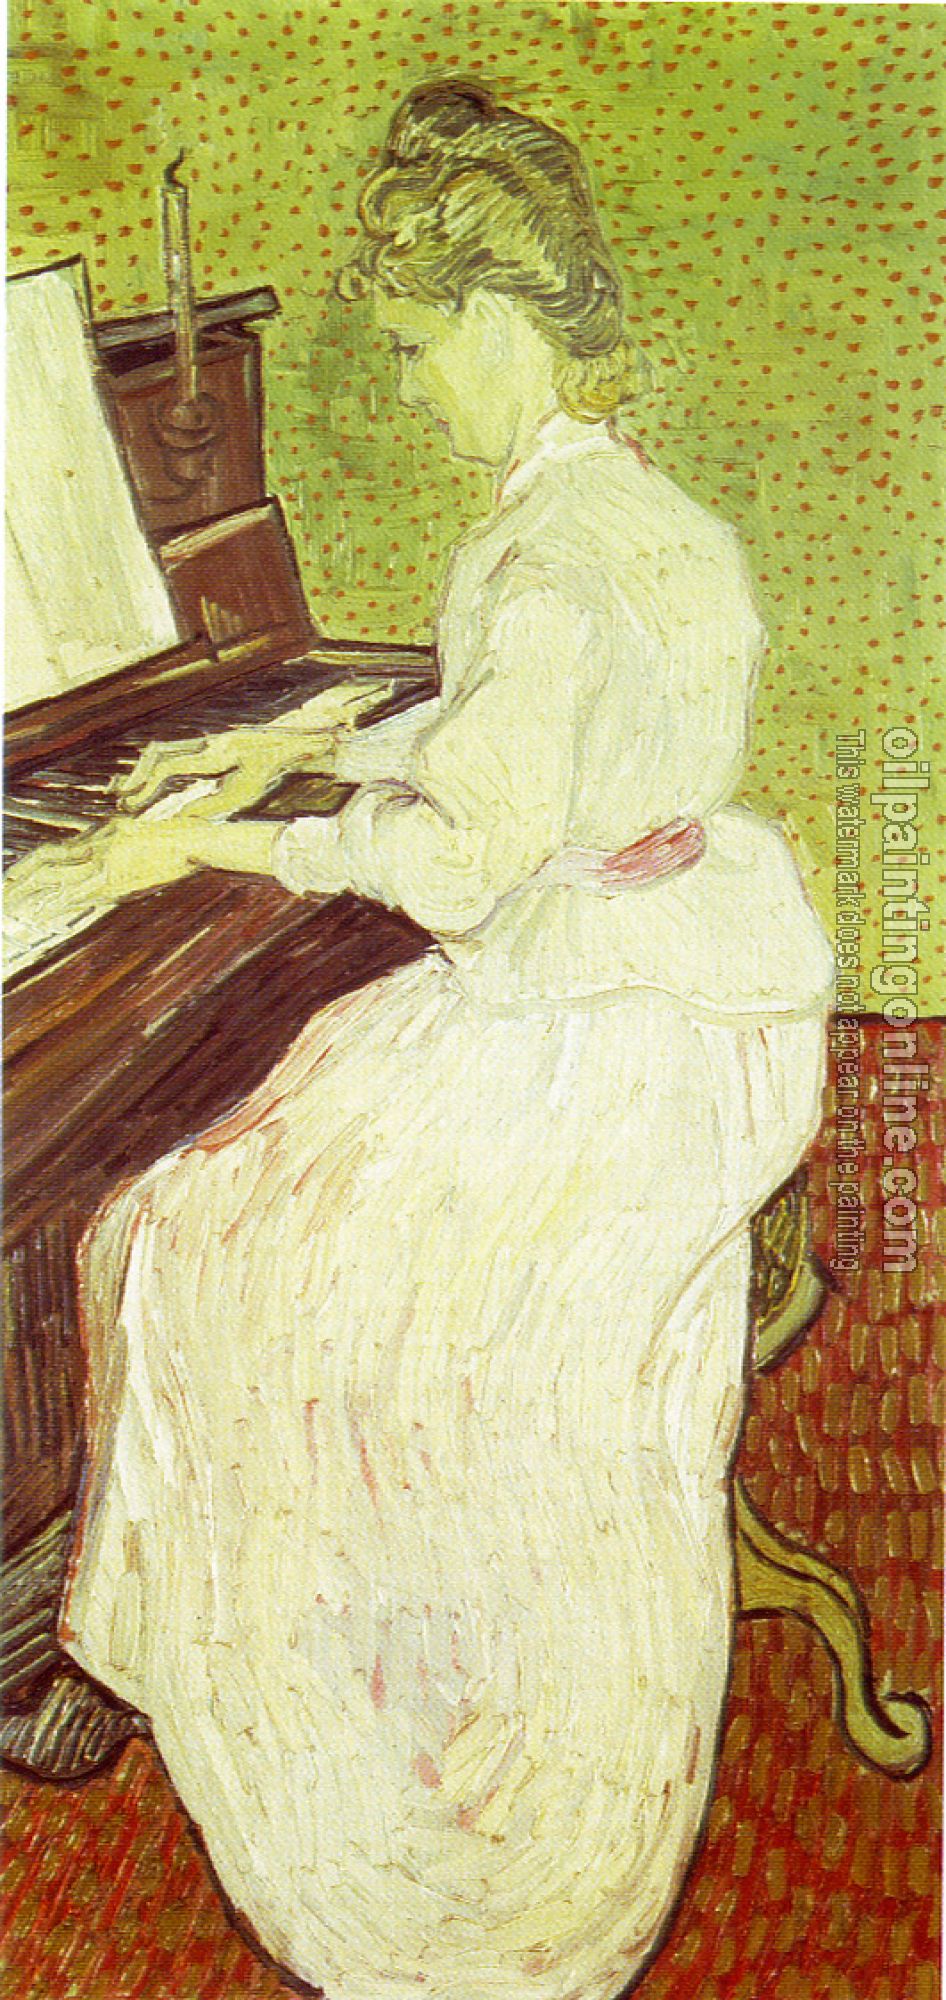 Gogh, Vincent van - Marguerite Gachet at the Piano